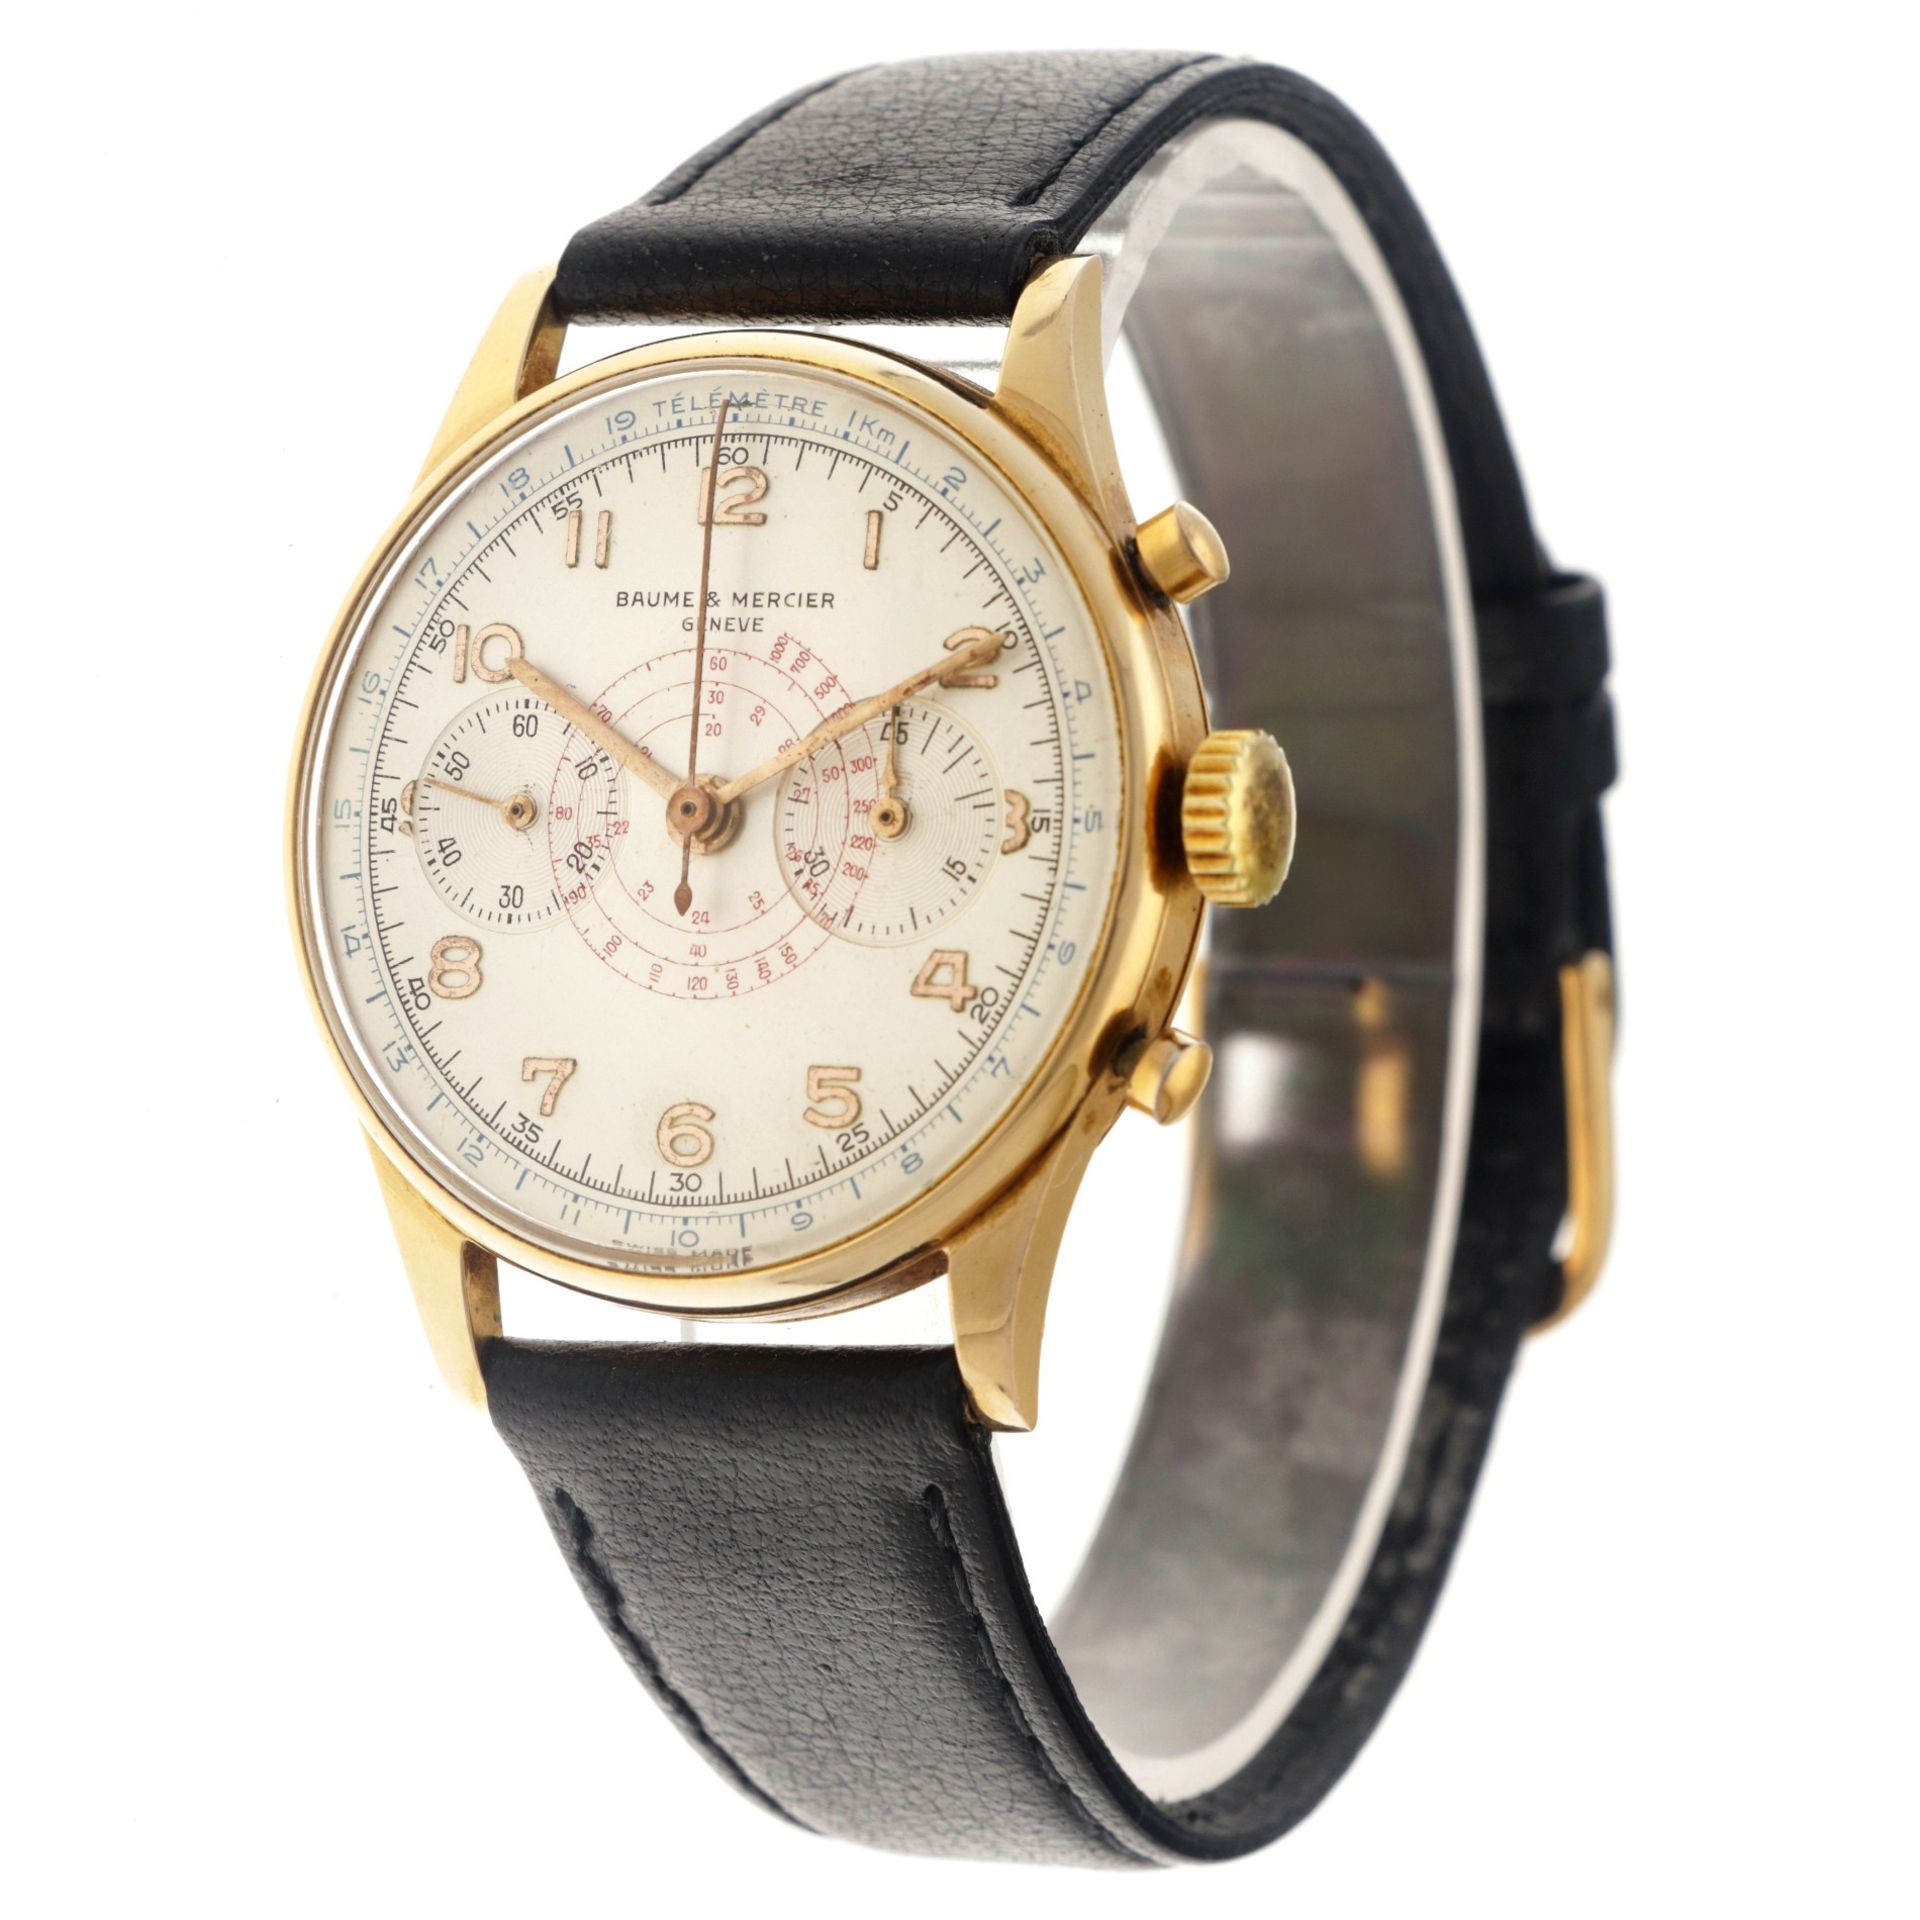 No Reserve - Baume & Mercier chronograph 18K. 3940 - Men's watch - approx. 1940. - Image 2 of 6